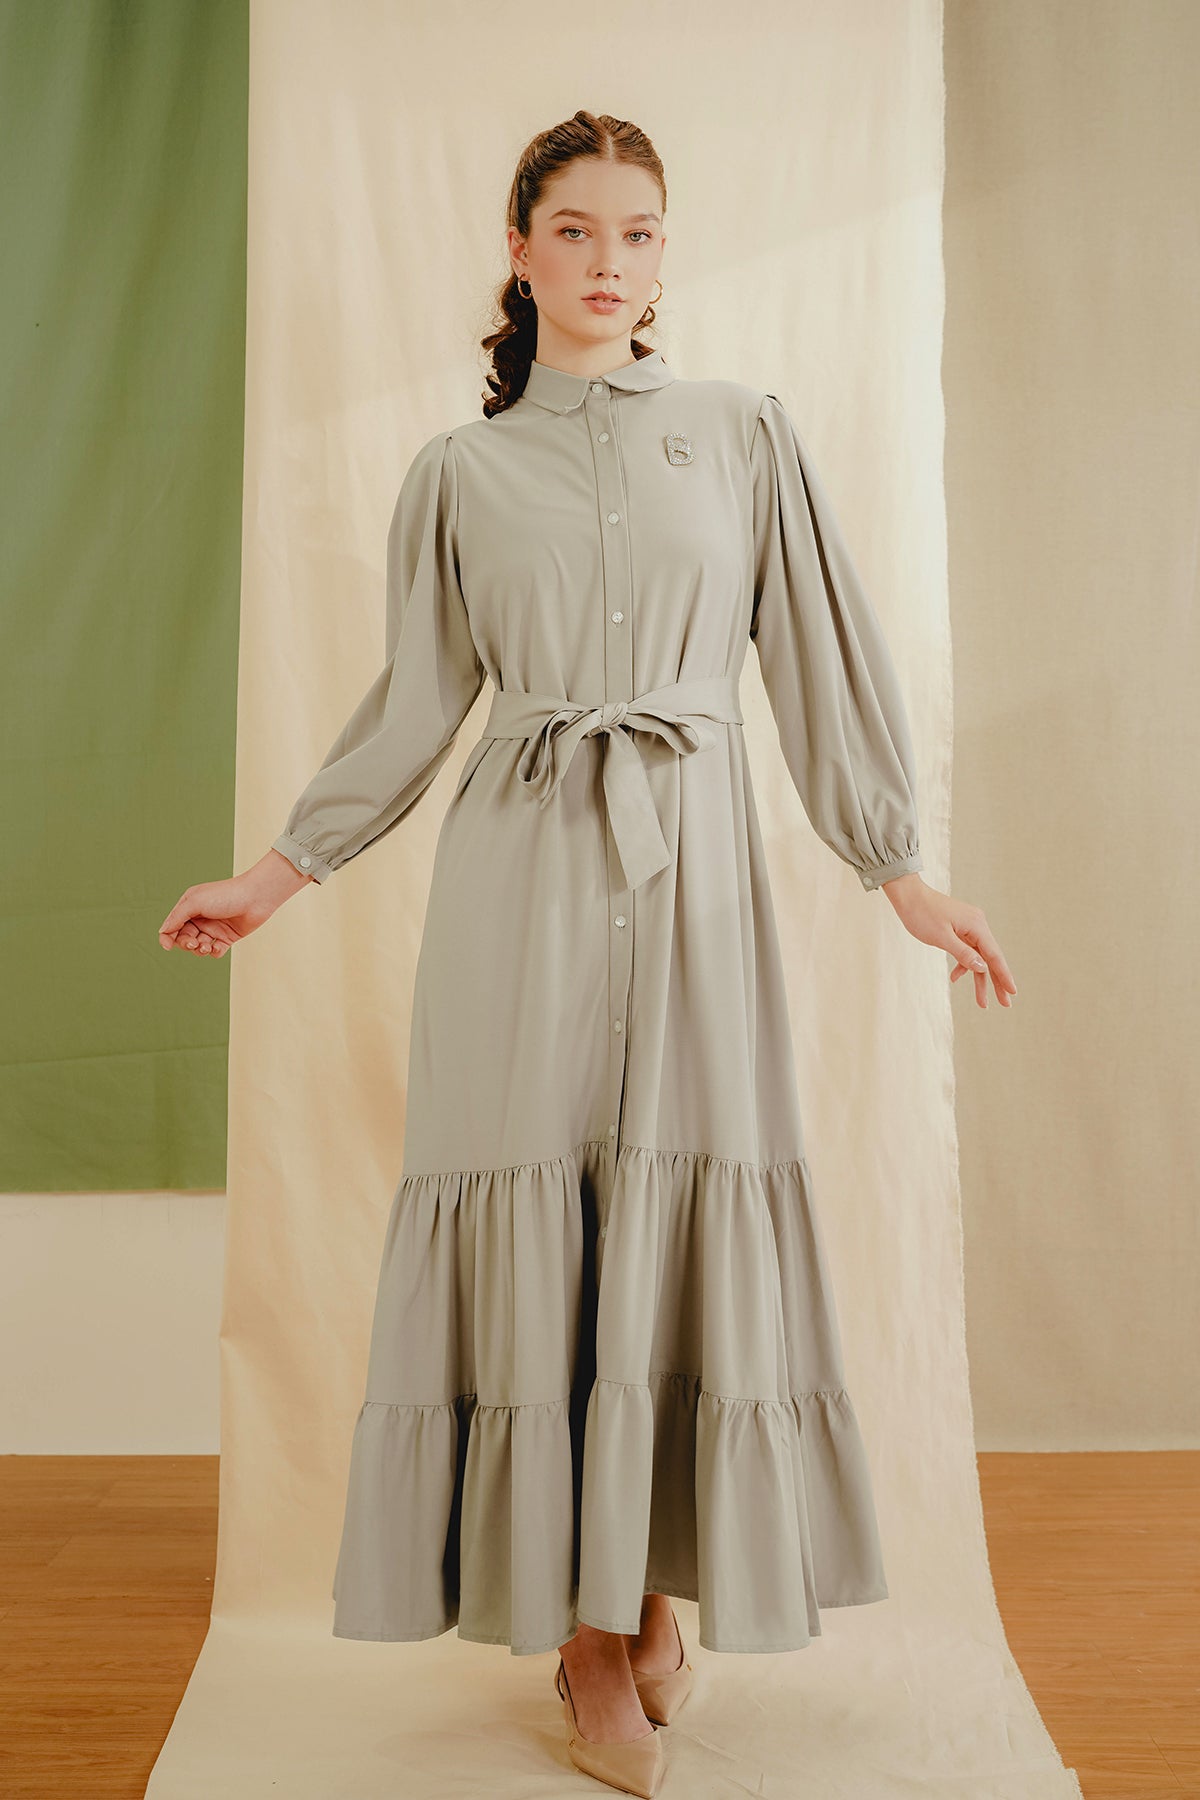 Clarice Tiered Maxi Dress - Khaki